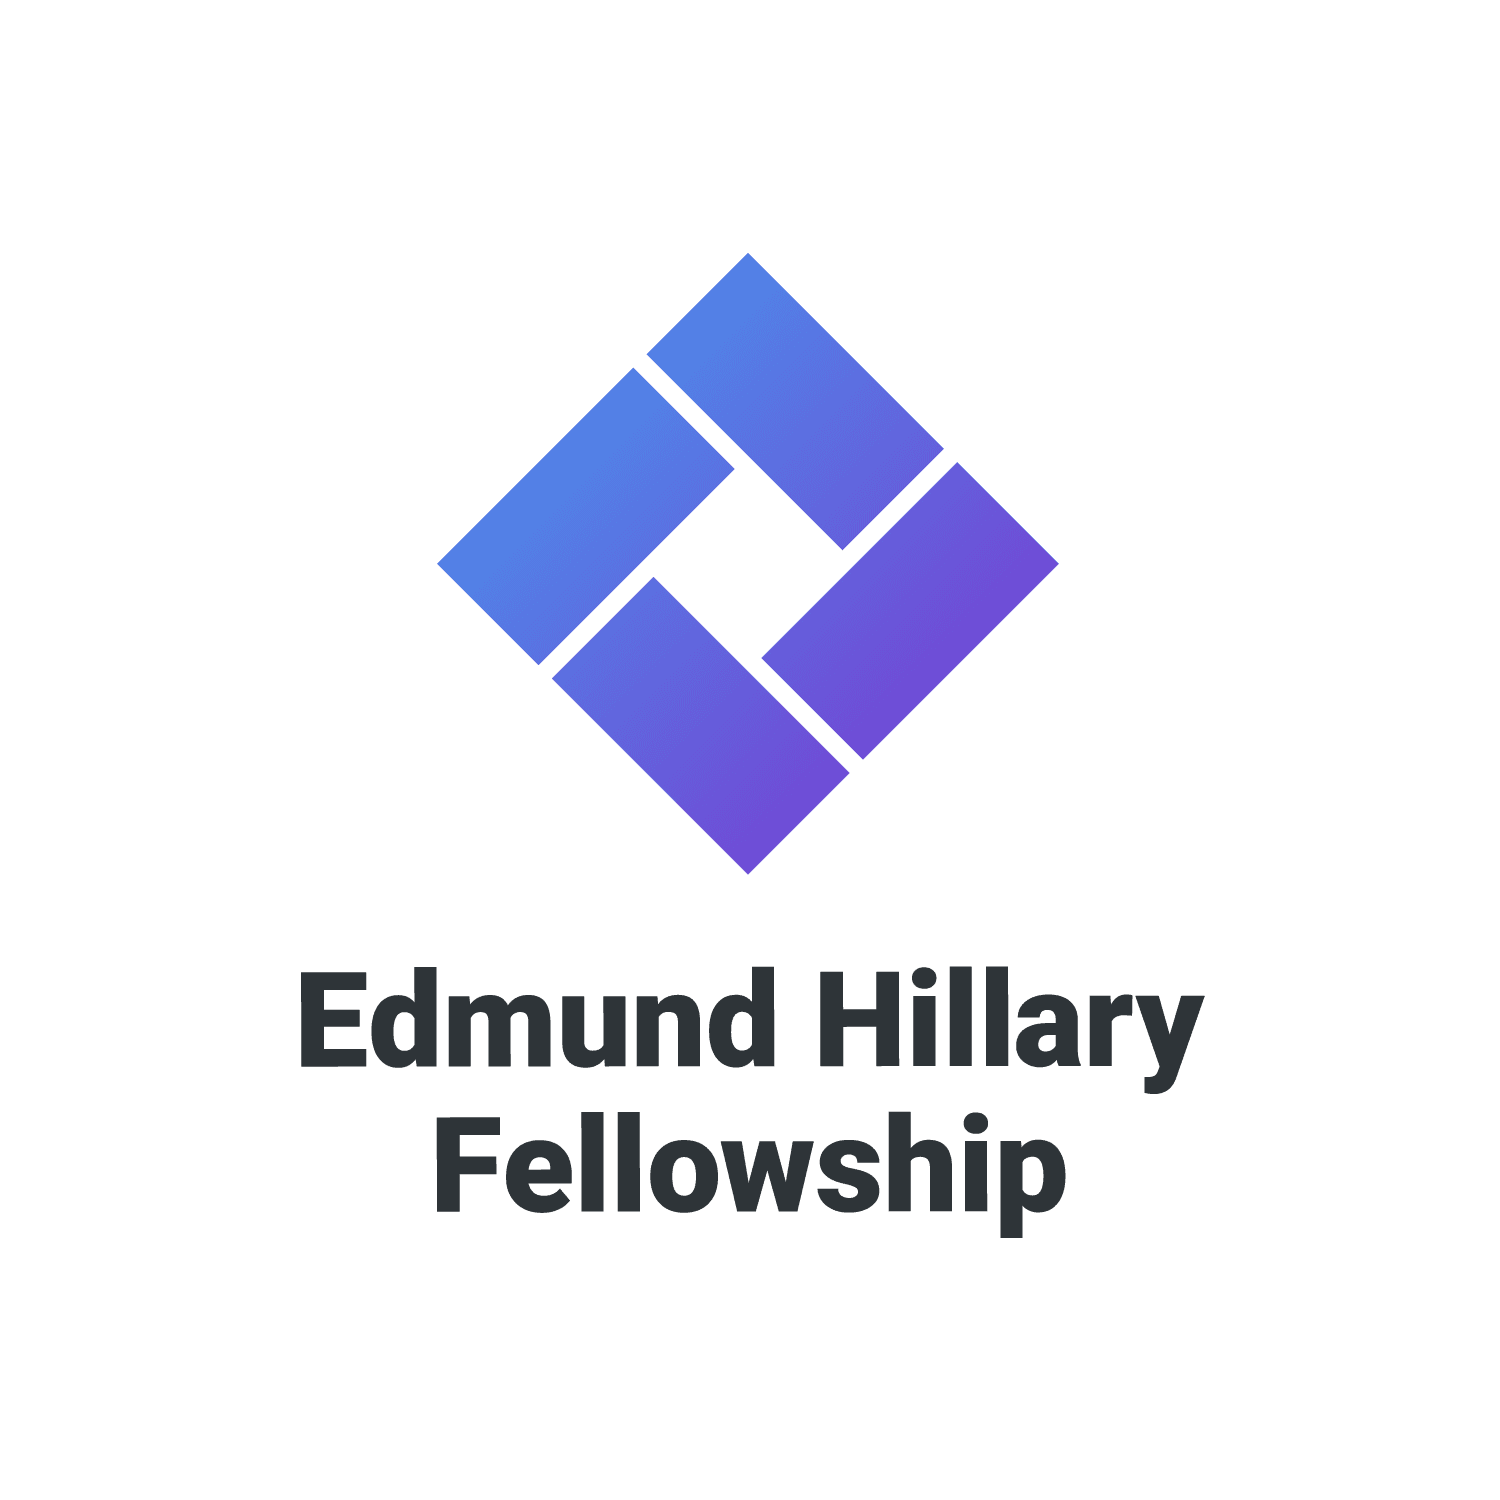 EHF Logo (Edmund Hillary Fellowship)